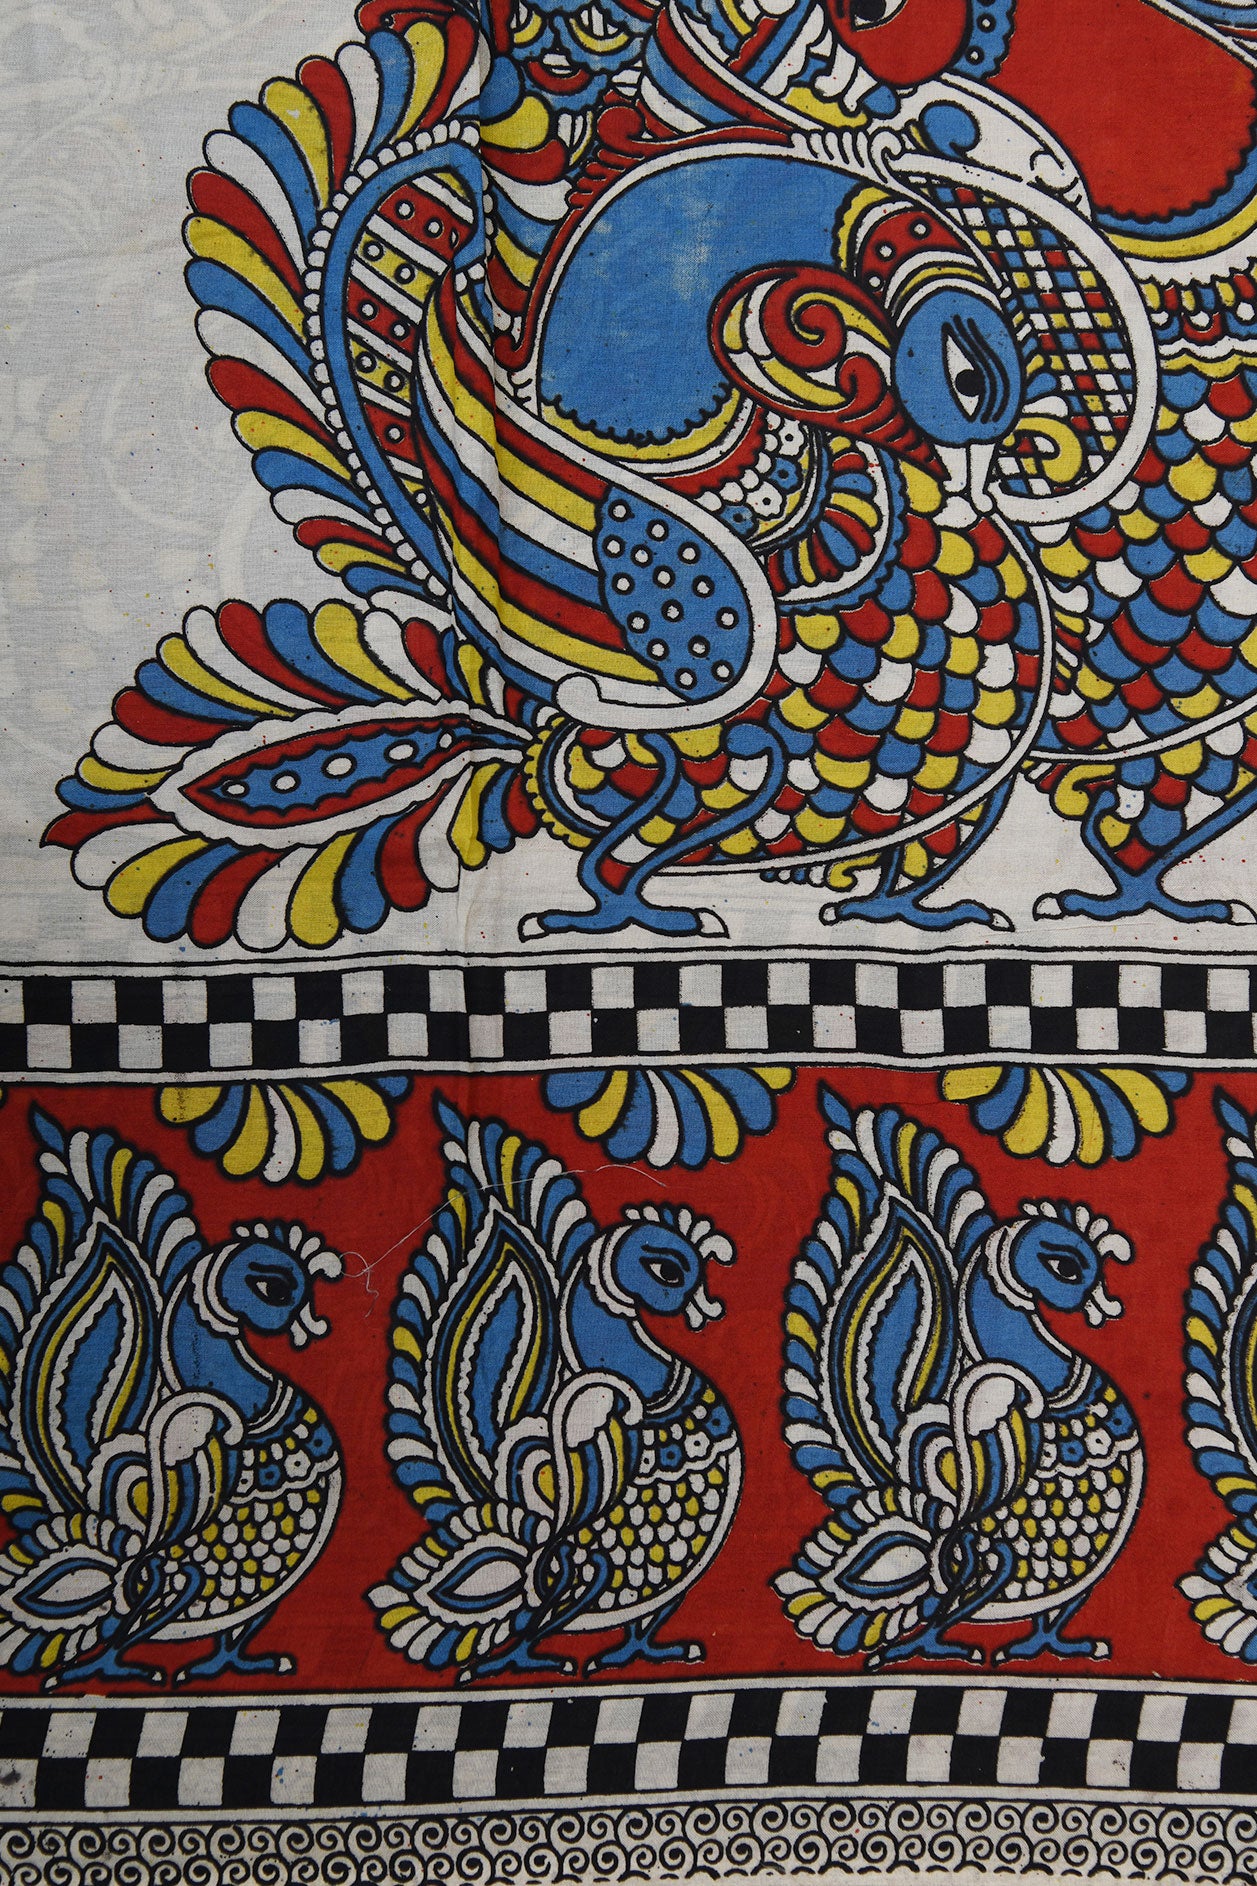 Peacock Design Multicolor Kalamkari Printed Semi Silk Saree